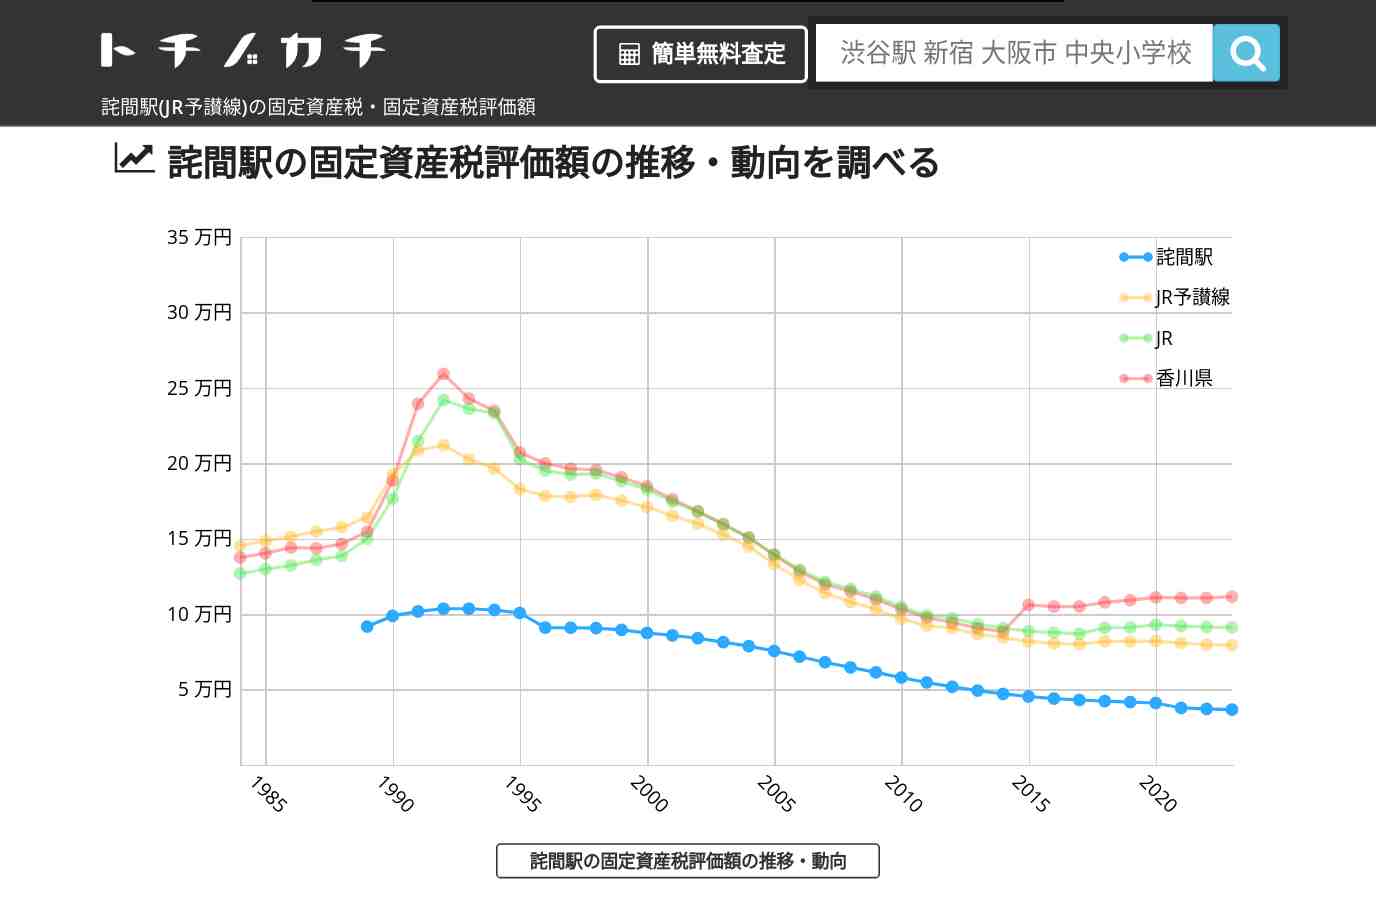 詫間駅(JR予讃線)の固定資産税・固定資産税評価額 | トチノカチ